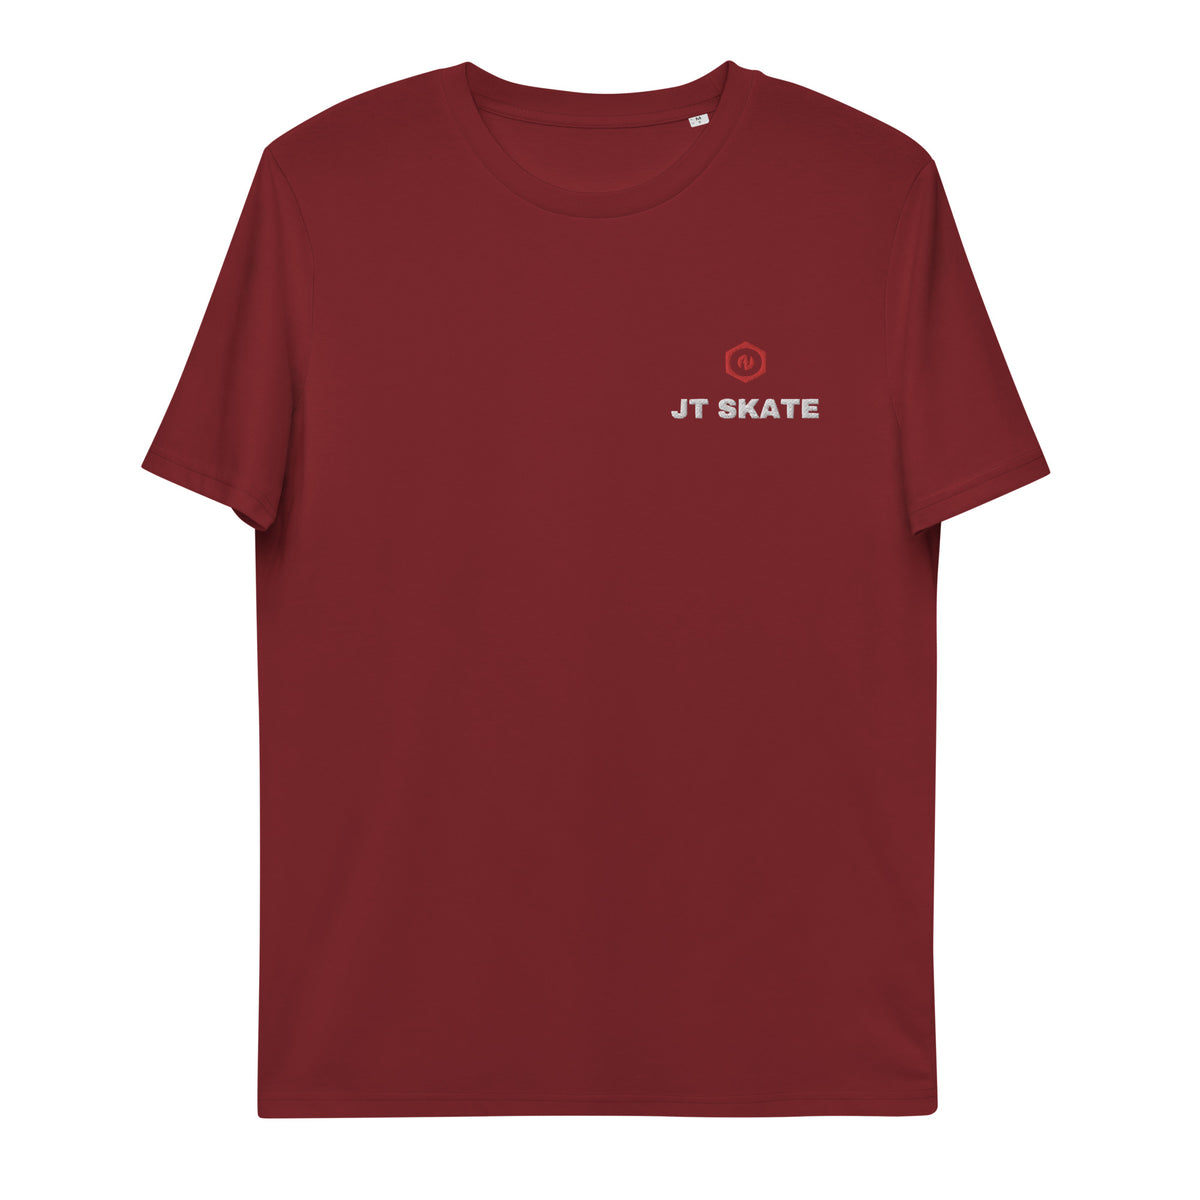 King - Unisex Organic Cotton T-Shirt - JT Skate - JT Skateboard